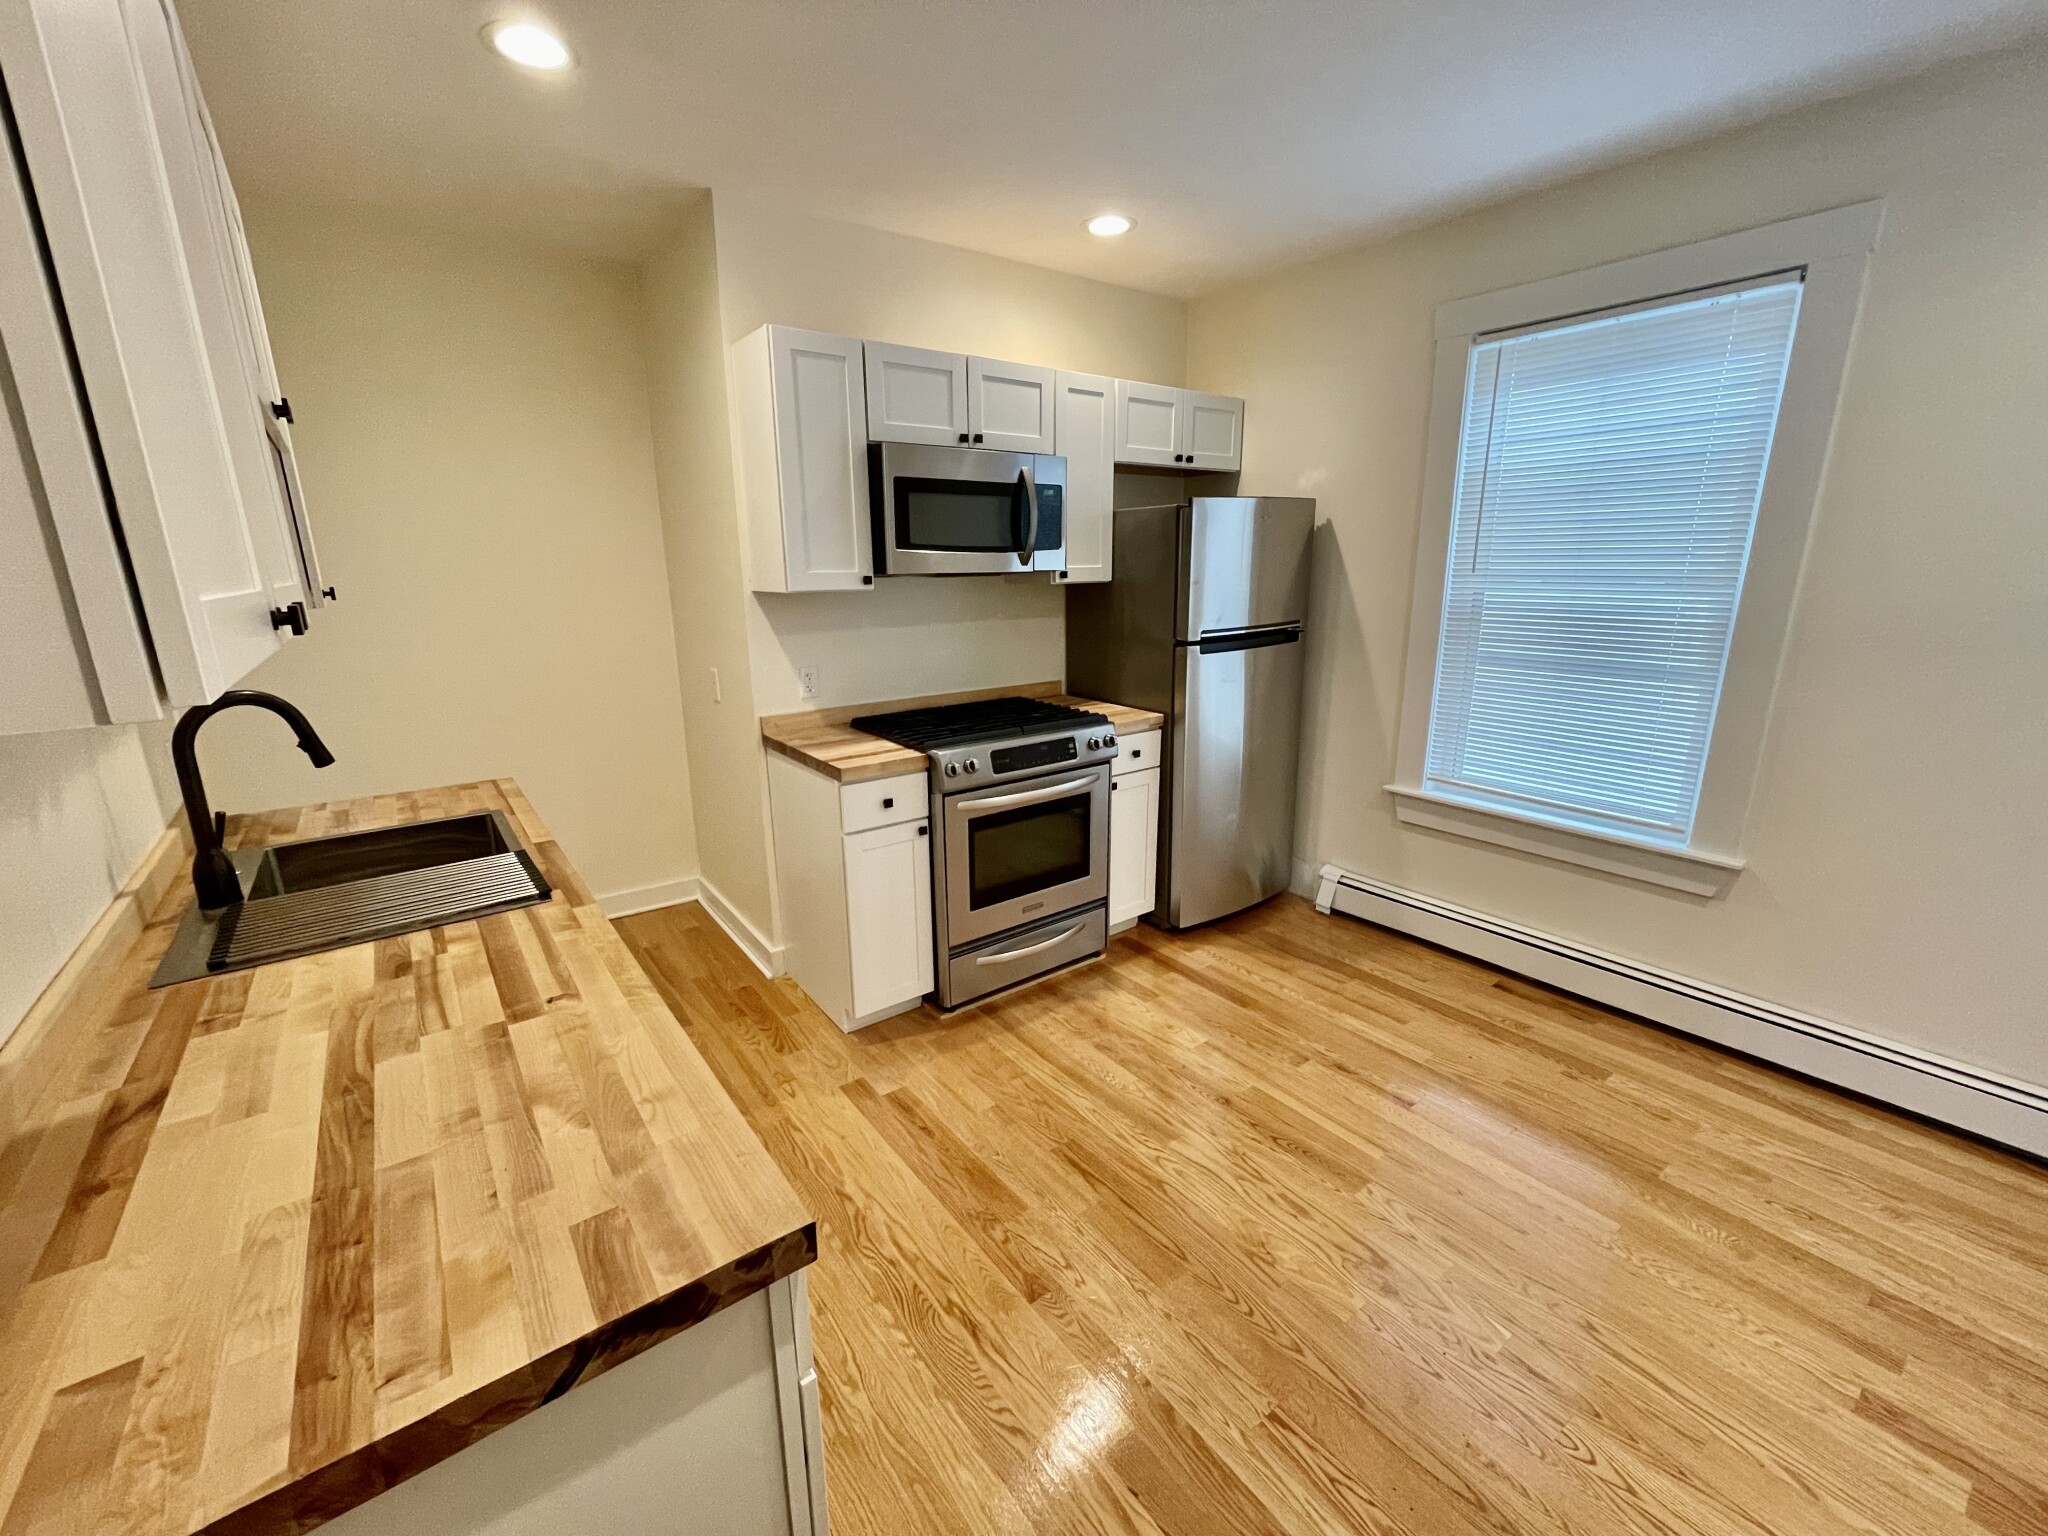 Photos of apartment on Massachusetts Ave.,Cambridge MA 02139